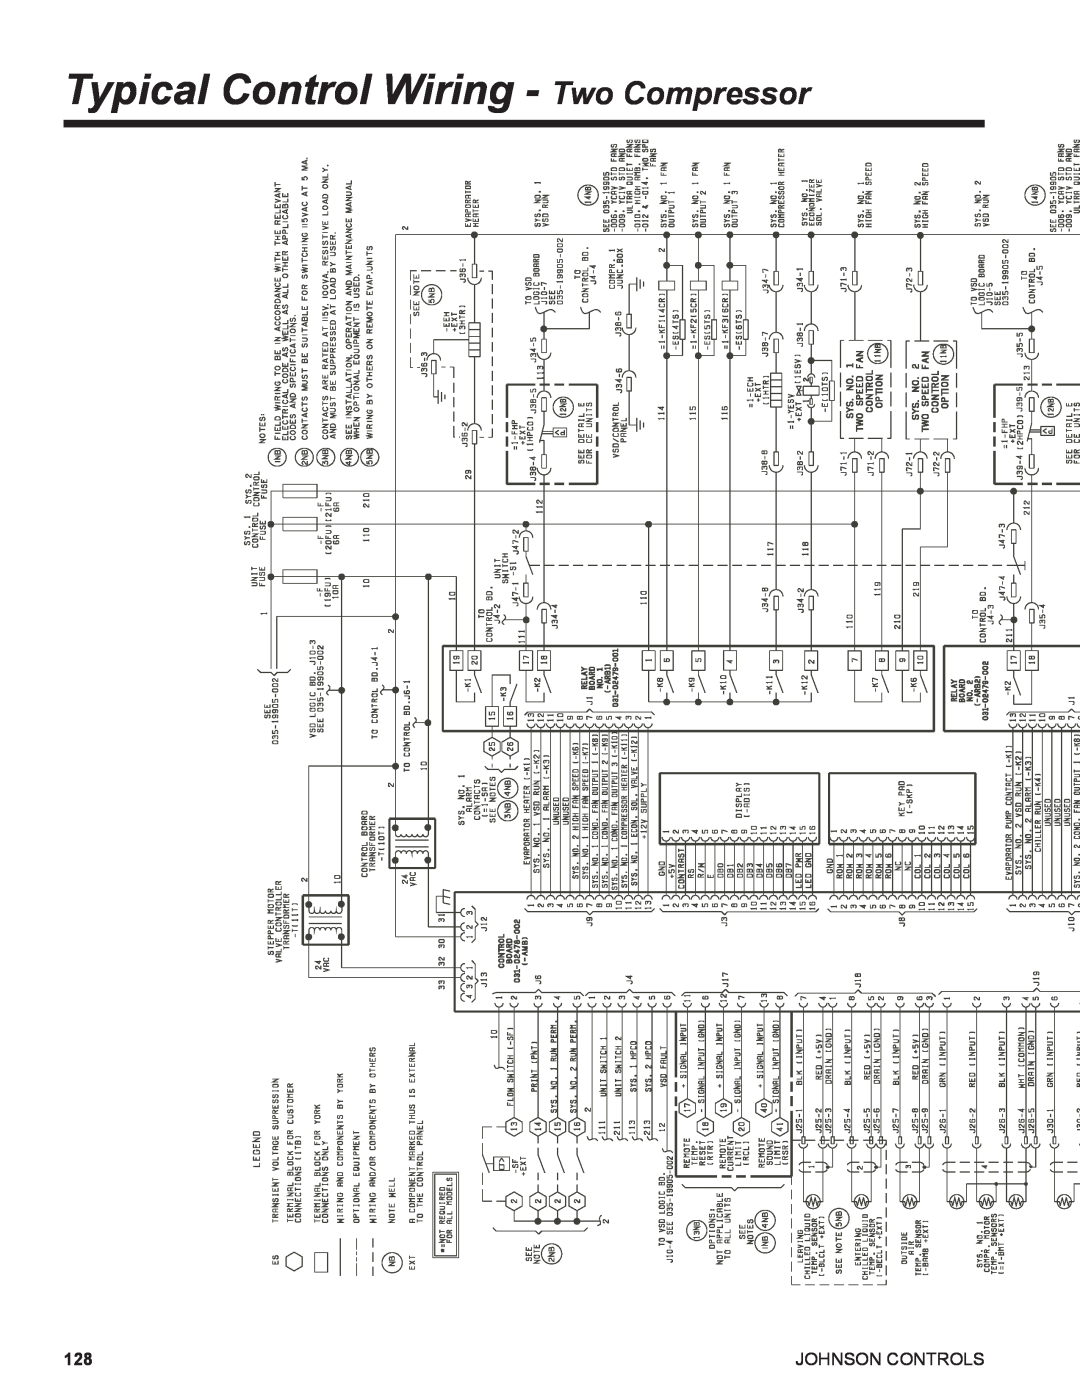 York R134A manual Typical Control Wiring - Two Compressor, Johnson Controls 